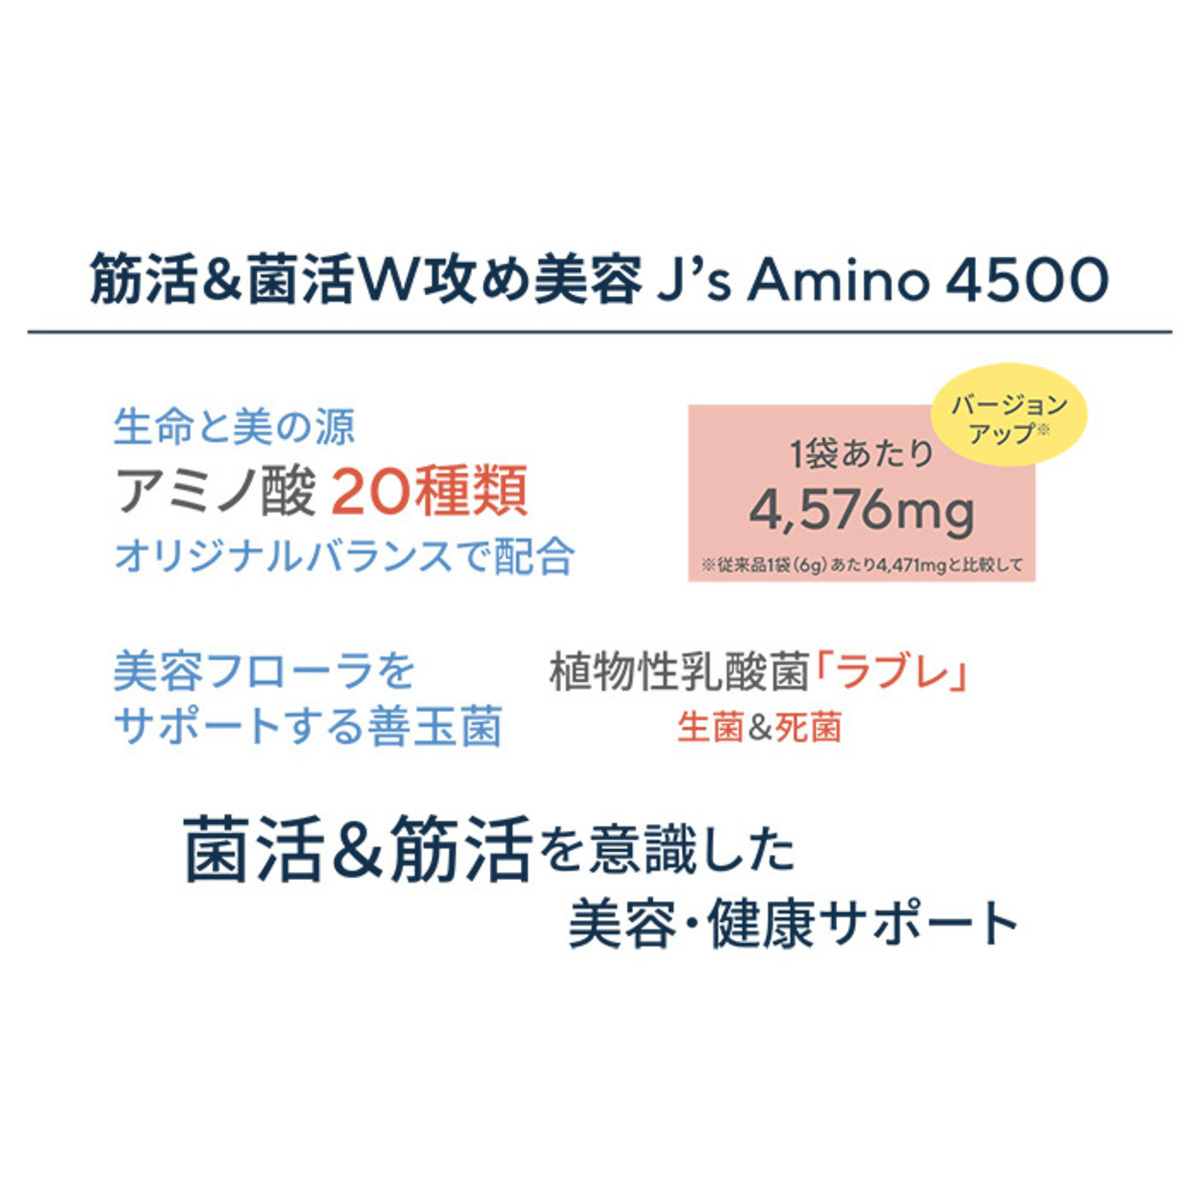 J's Amino 4500 30包 - QVC.jp